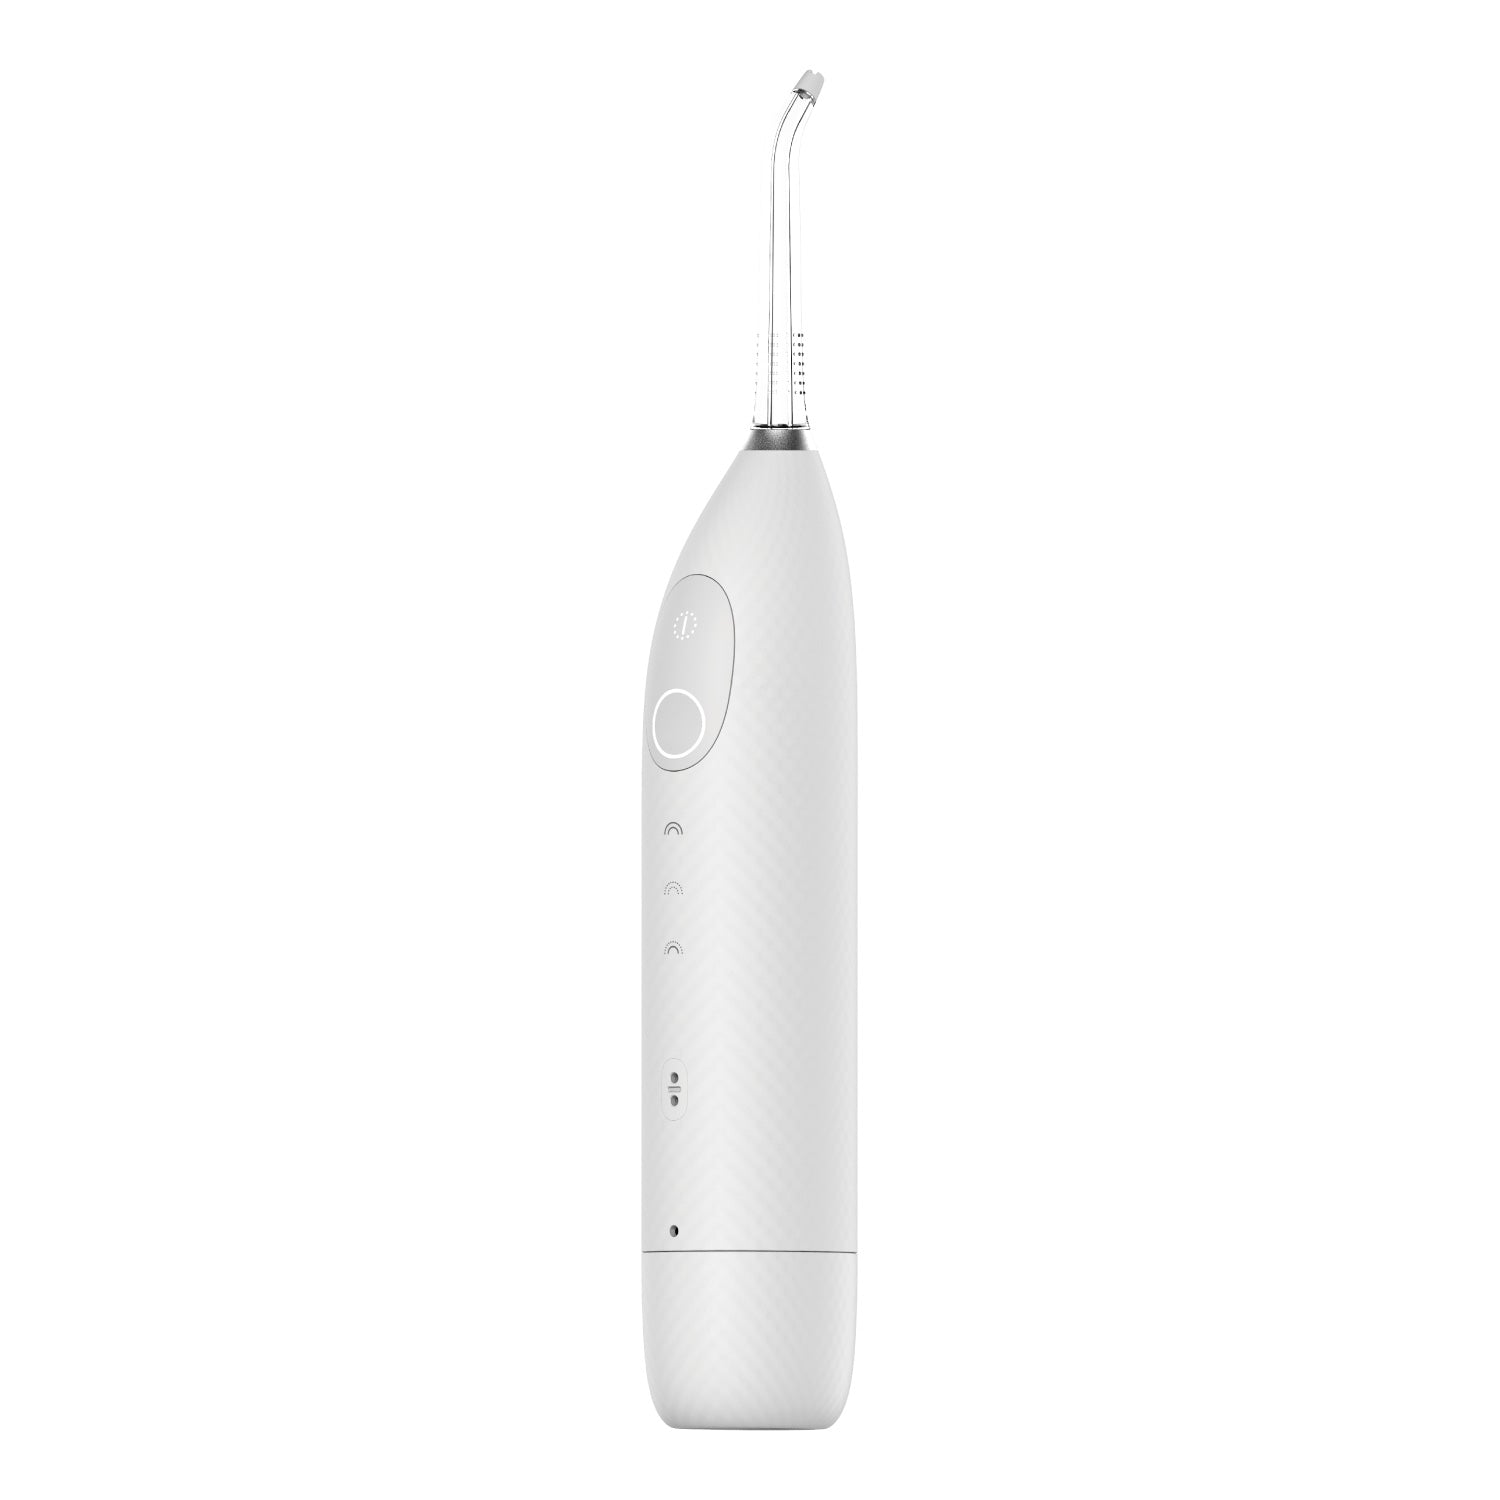 Oclean W1 Portable Dental Water Flosser-Dental Water Jets-Oclean US Store